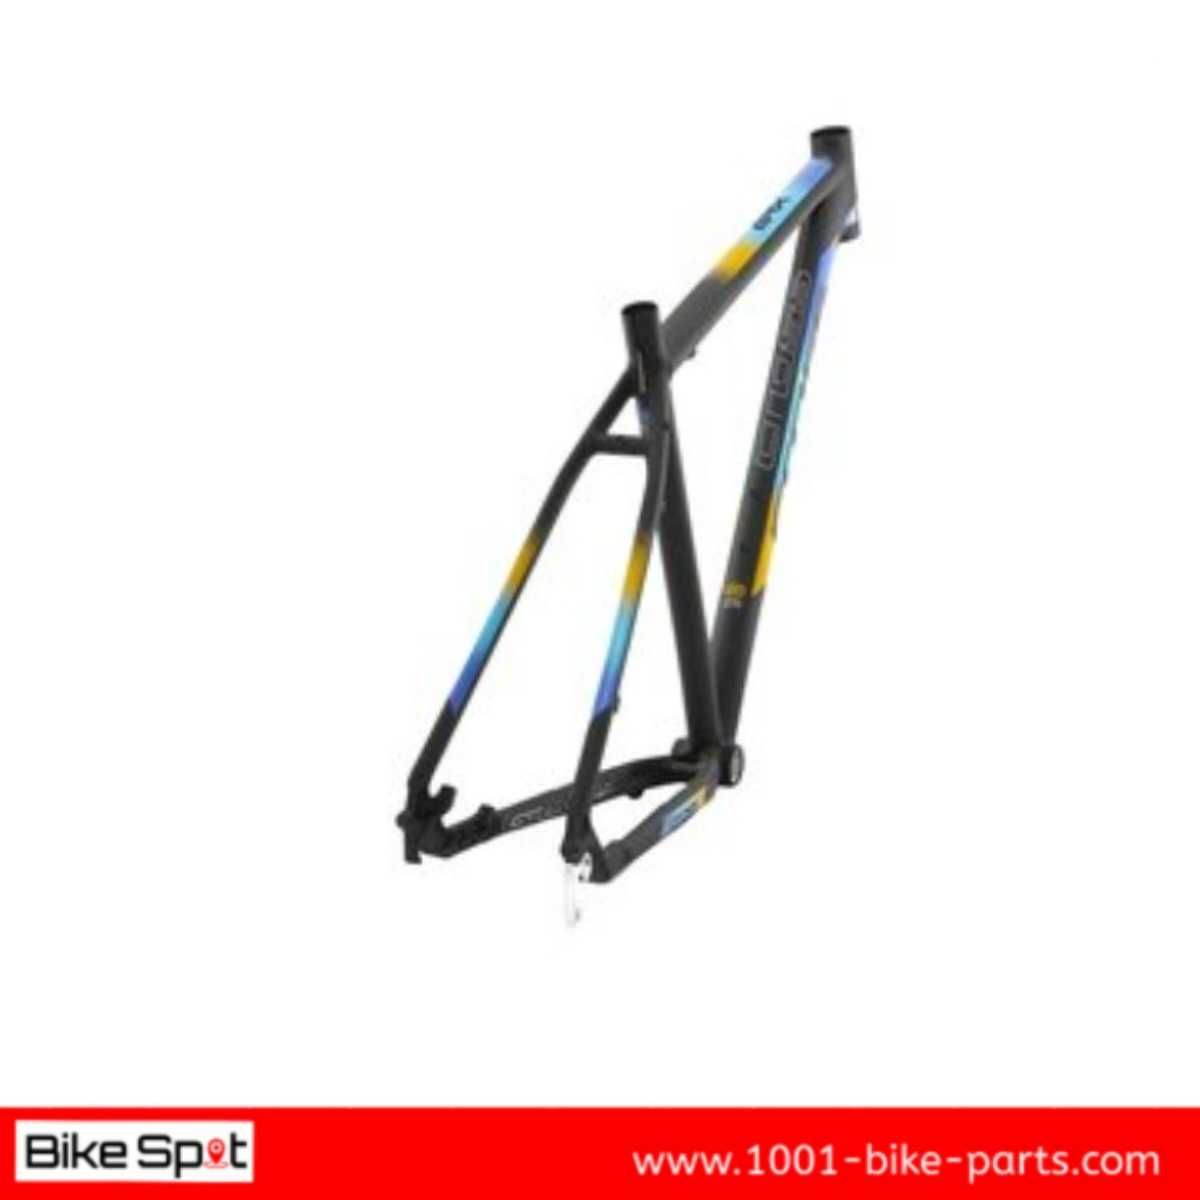 29er CROSS XL-51cm Alloy Frame Black Blue Orange Рамка Велосипед